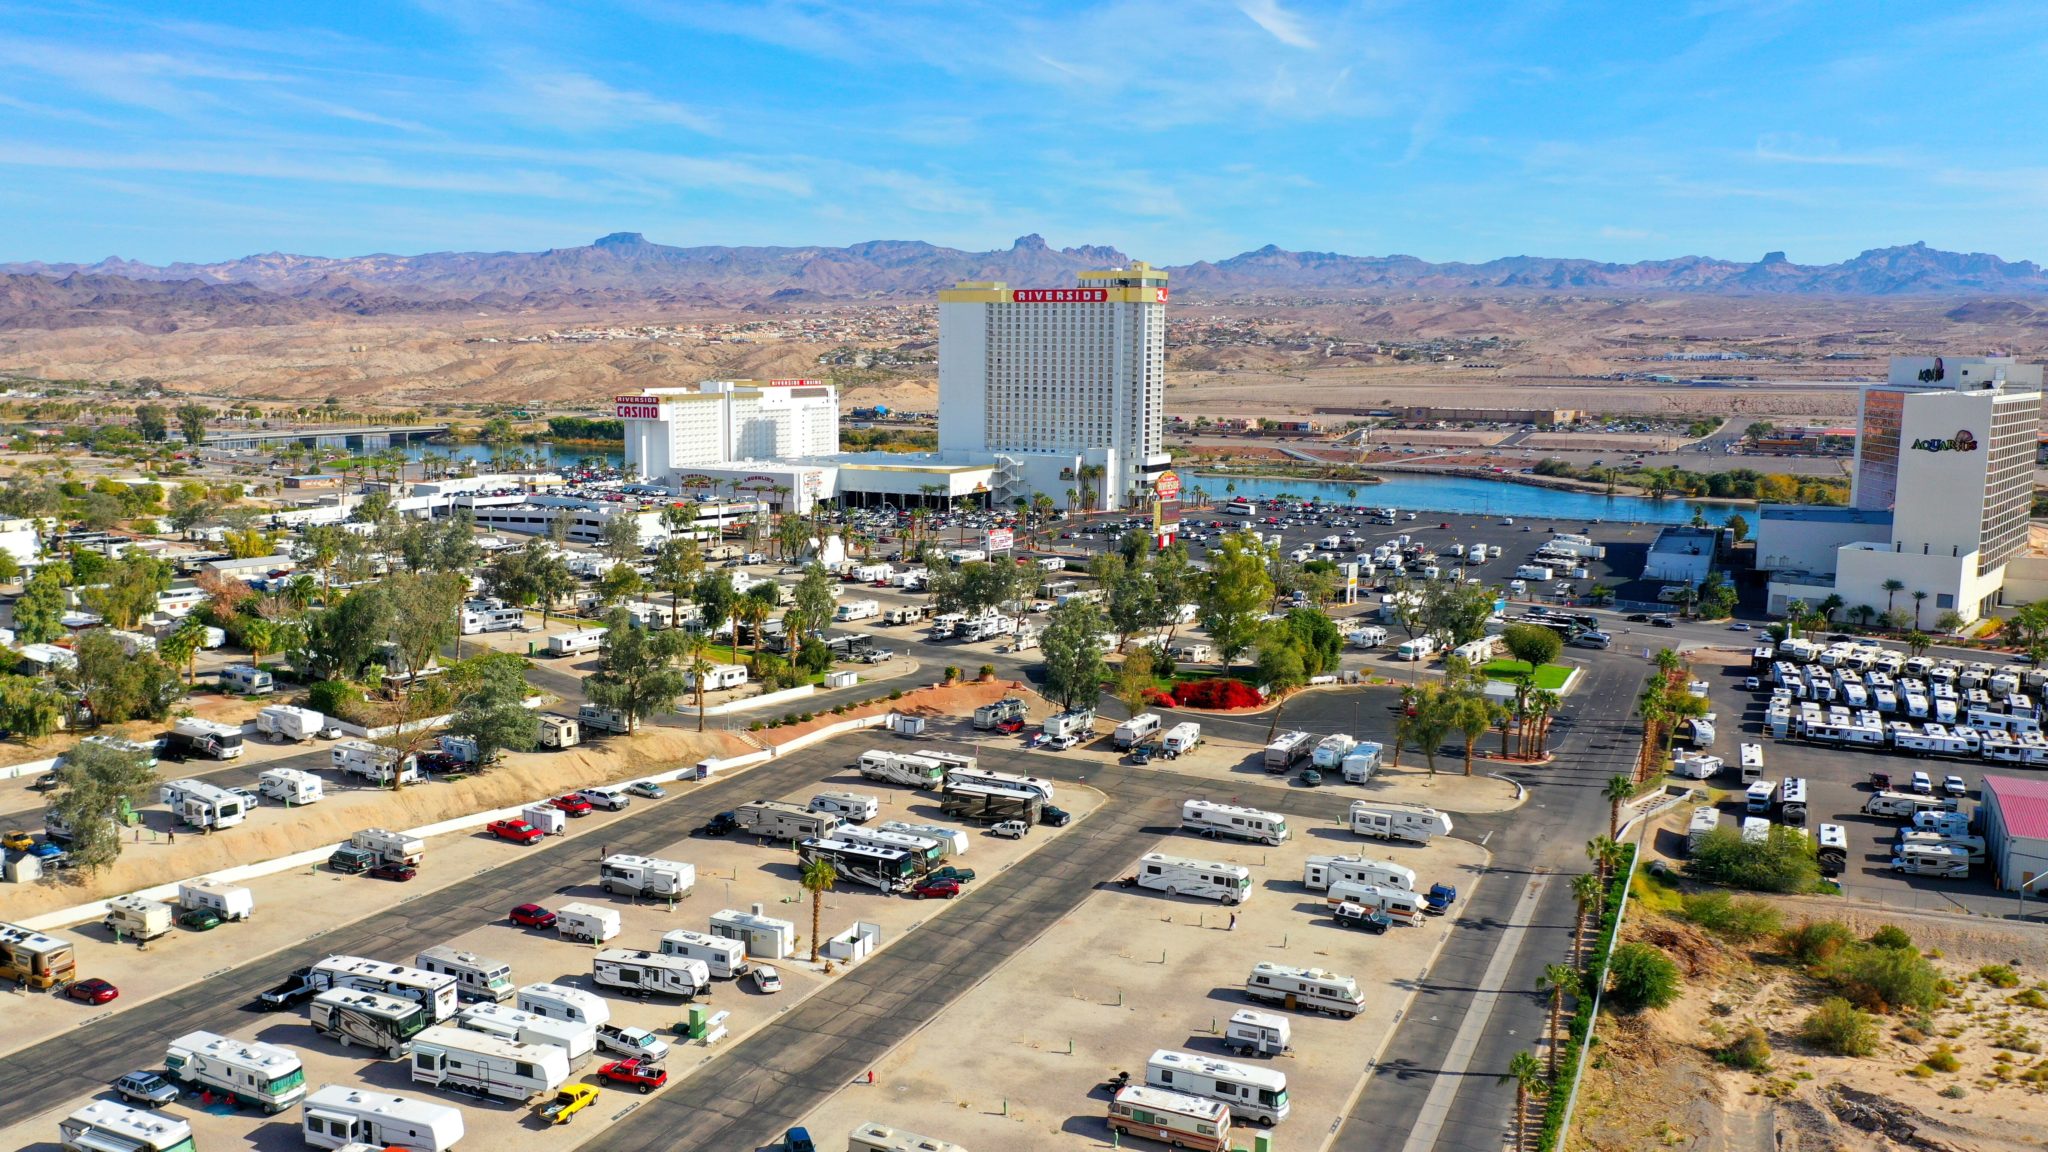 viejas casino resort rv parking lot